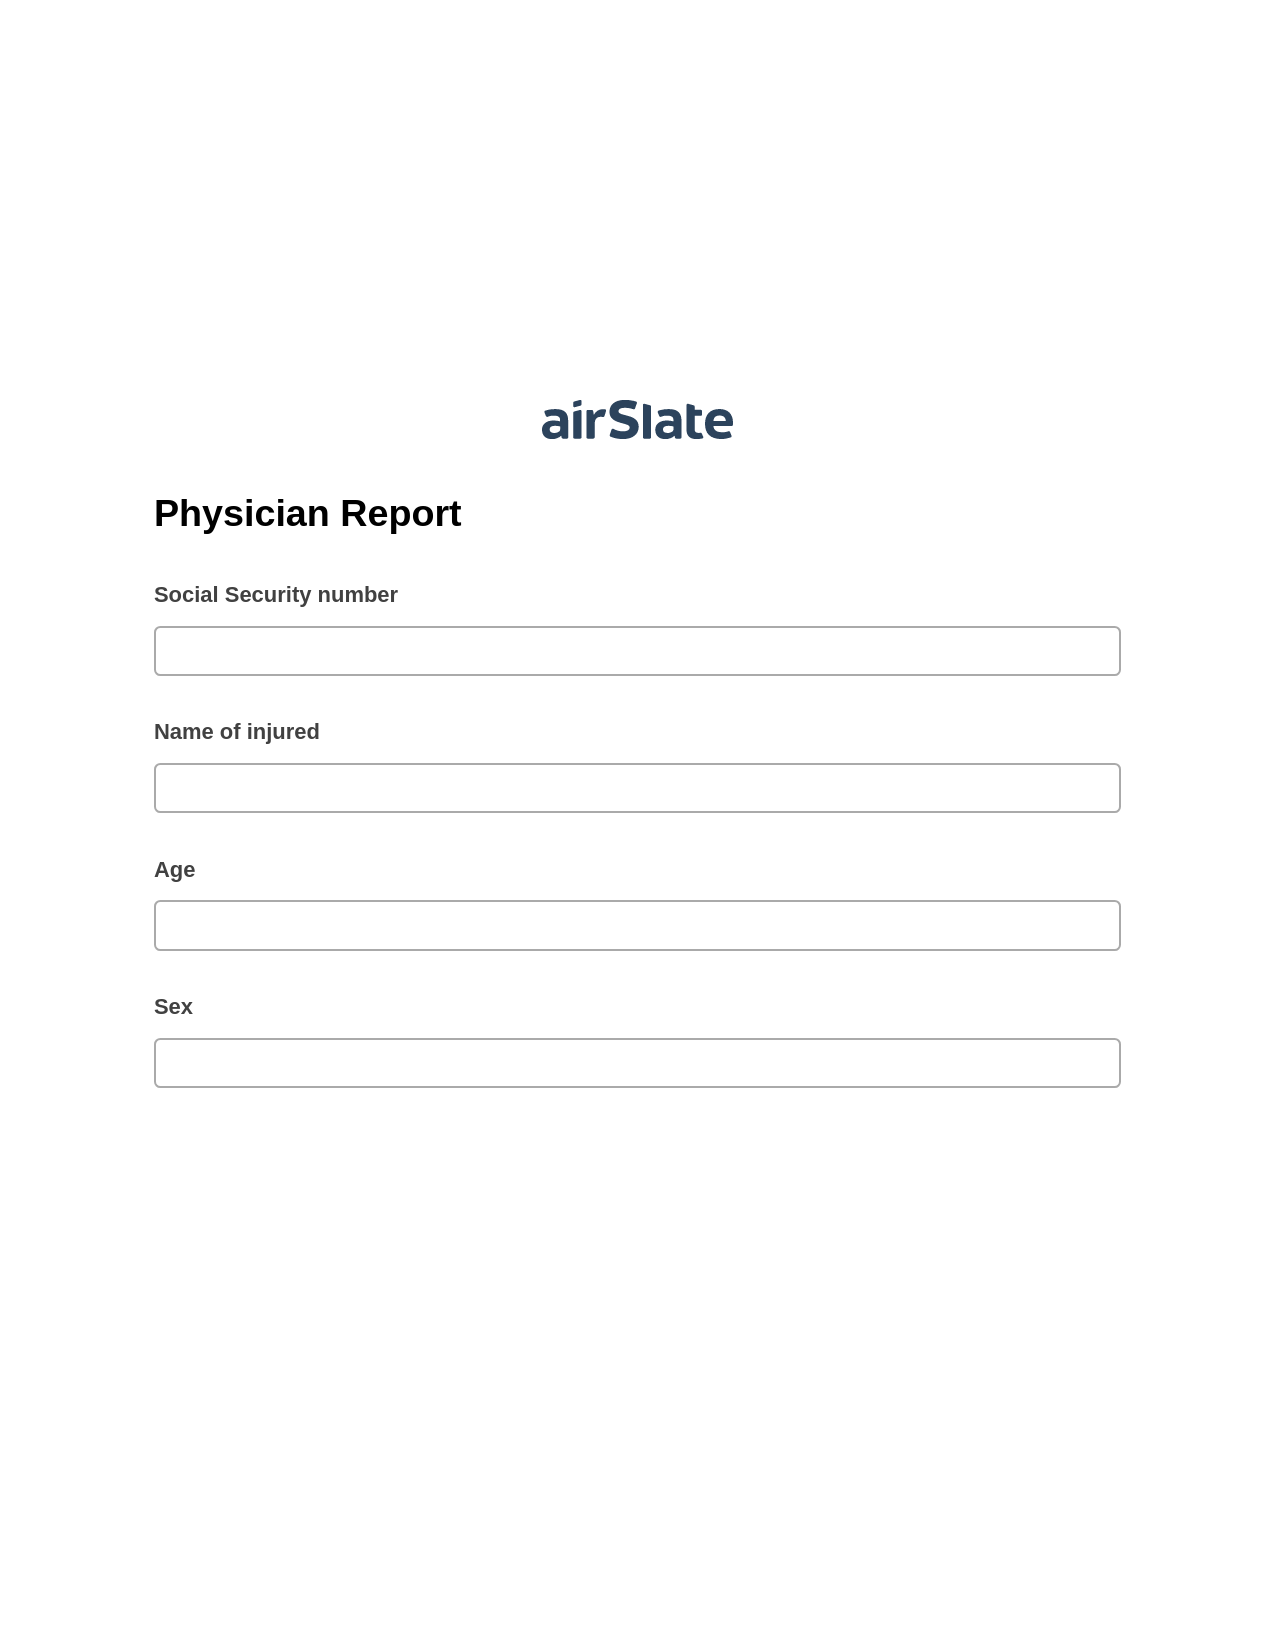 Physician Report Pre-fill from MySQL Bot, SendGrid send Campaign bot, Slack Two-Way Binding Bot